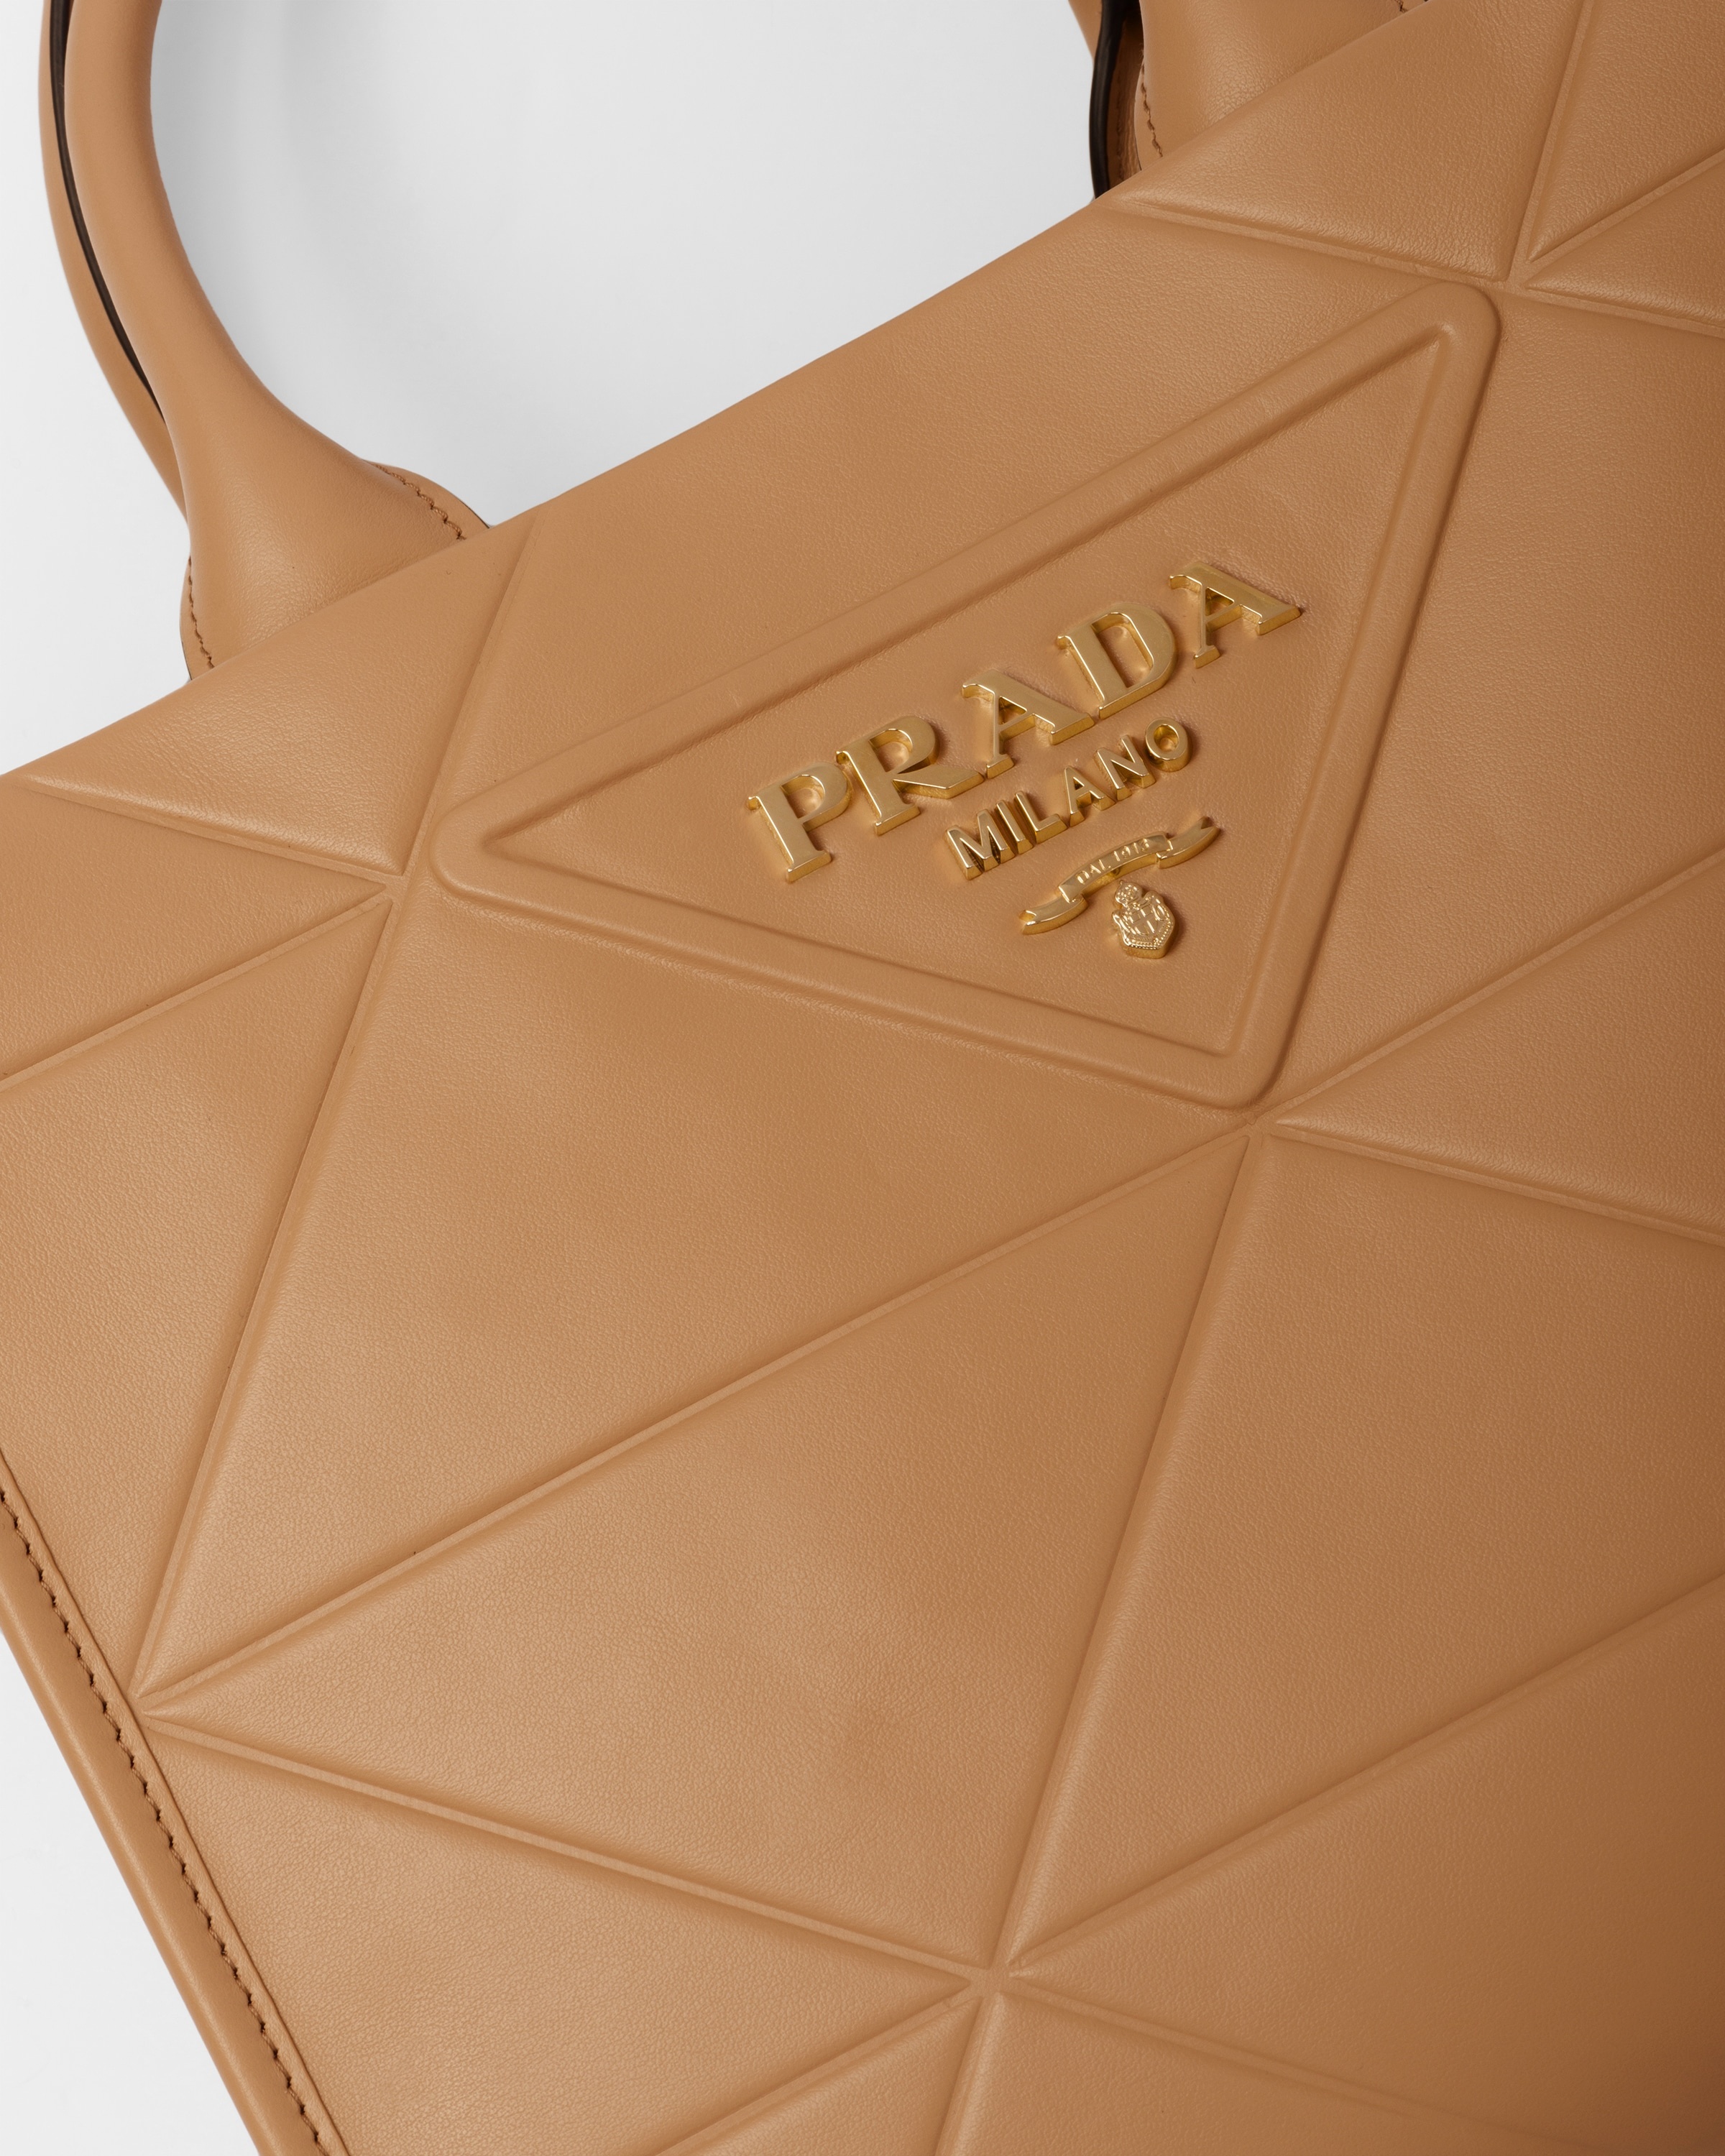 Medium Leather Prada Symbole Bag with Topstitching, Women, White